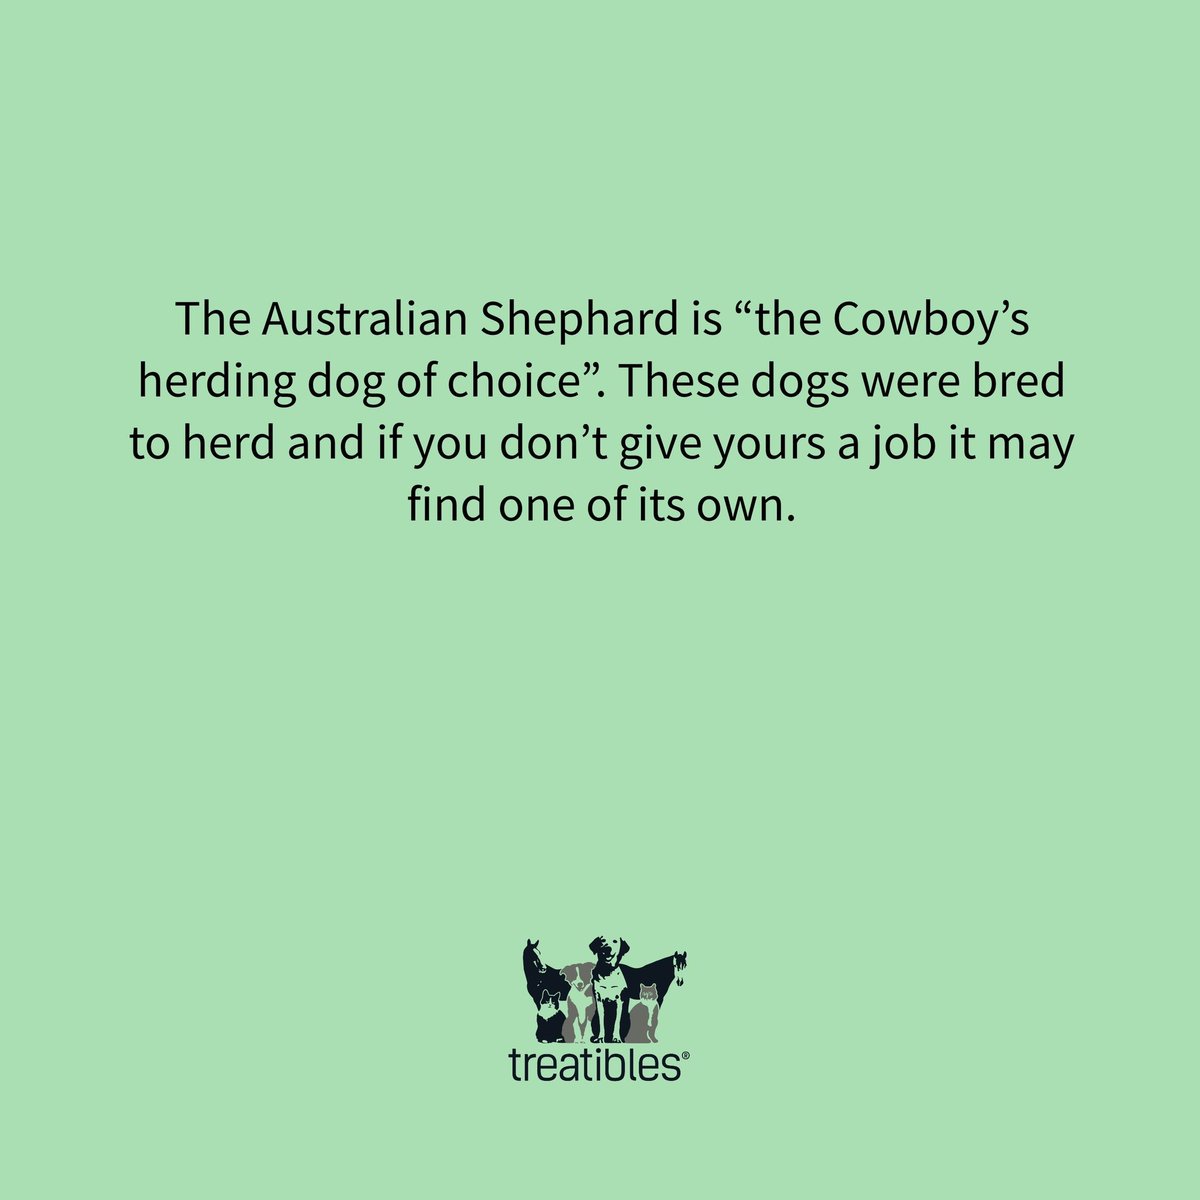 Happy Australian Shepherds Day ❤️🥰
.
.
.
 #aussielovers #australianshepherds #treatibles #CBD